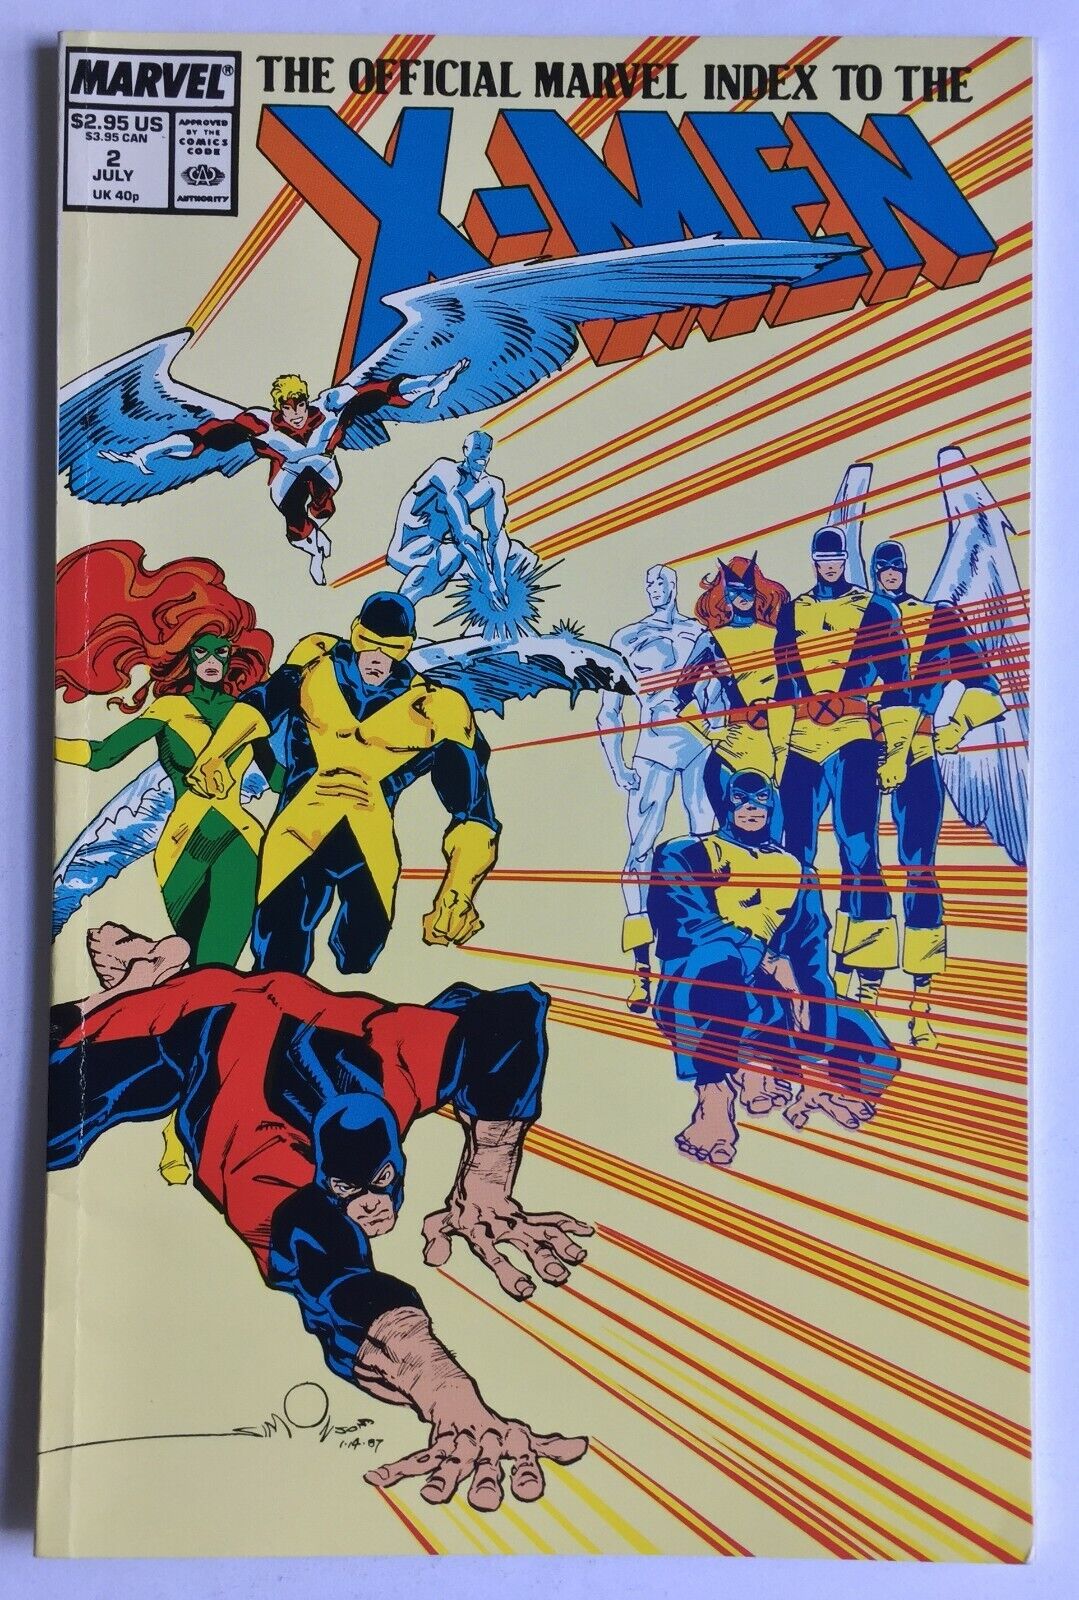 Marvel Index to the X-Men #2 (Jul 1987, Marvel)